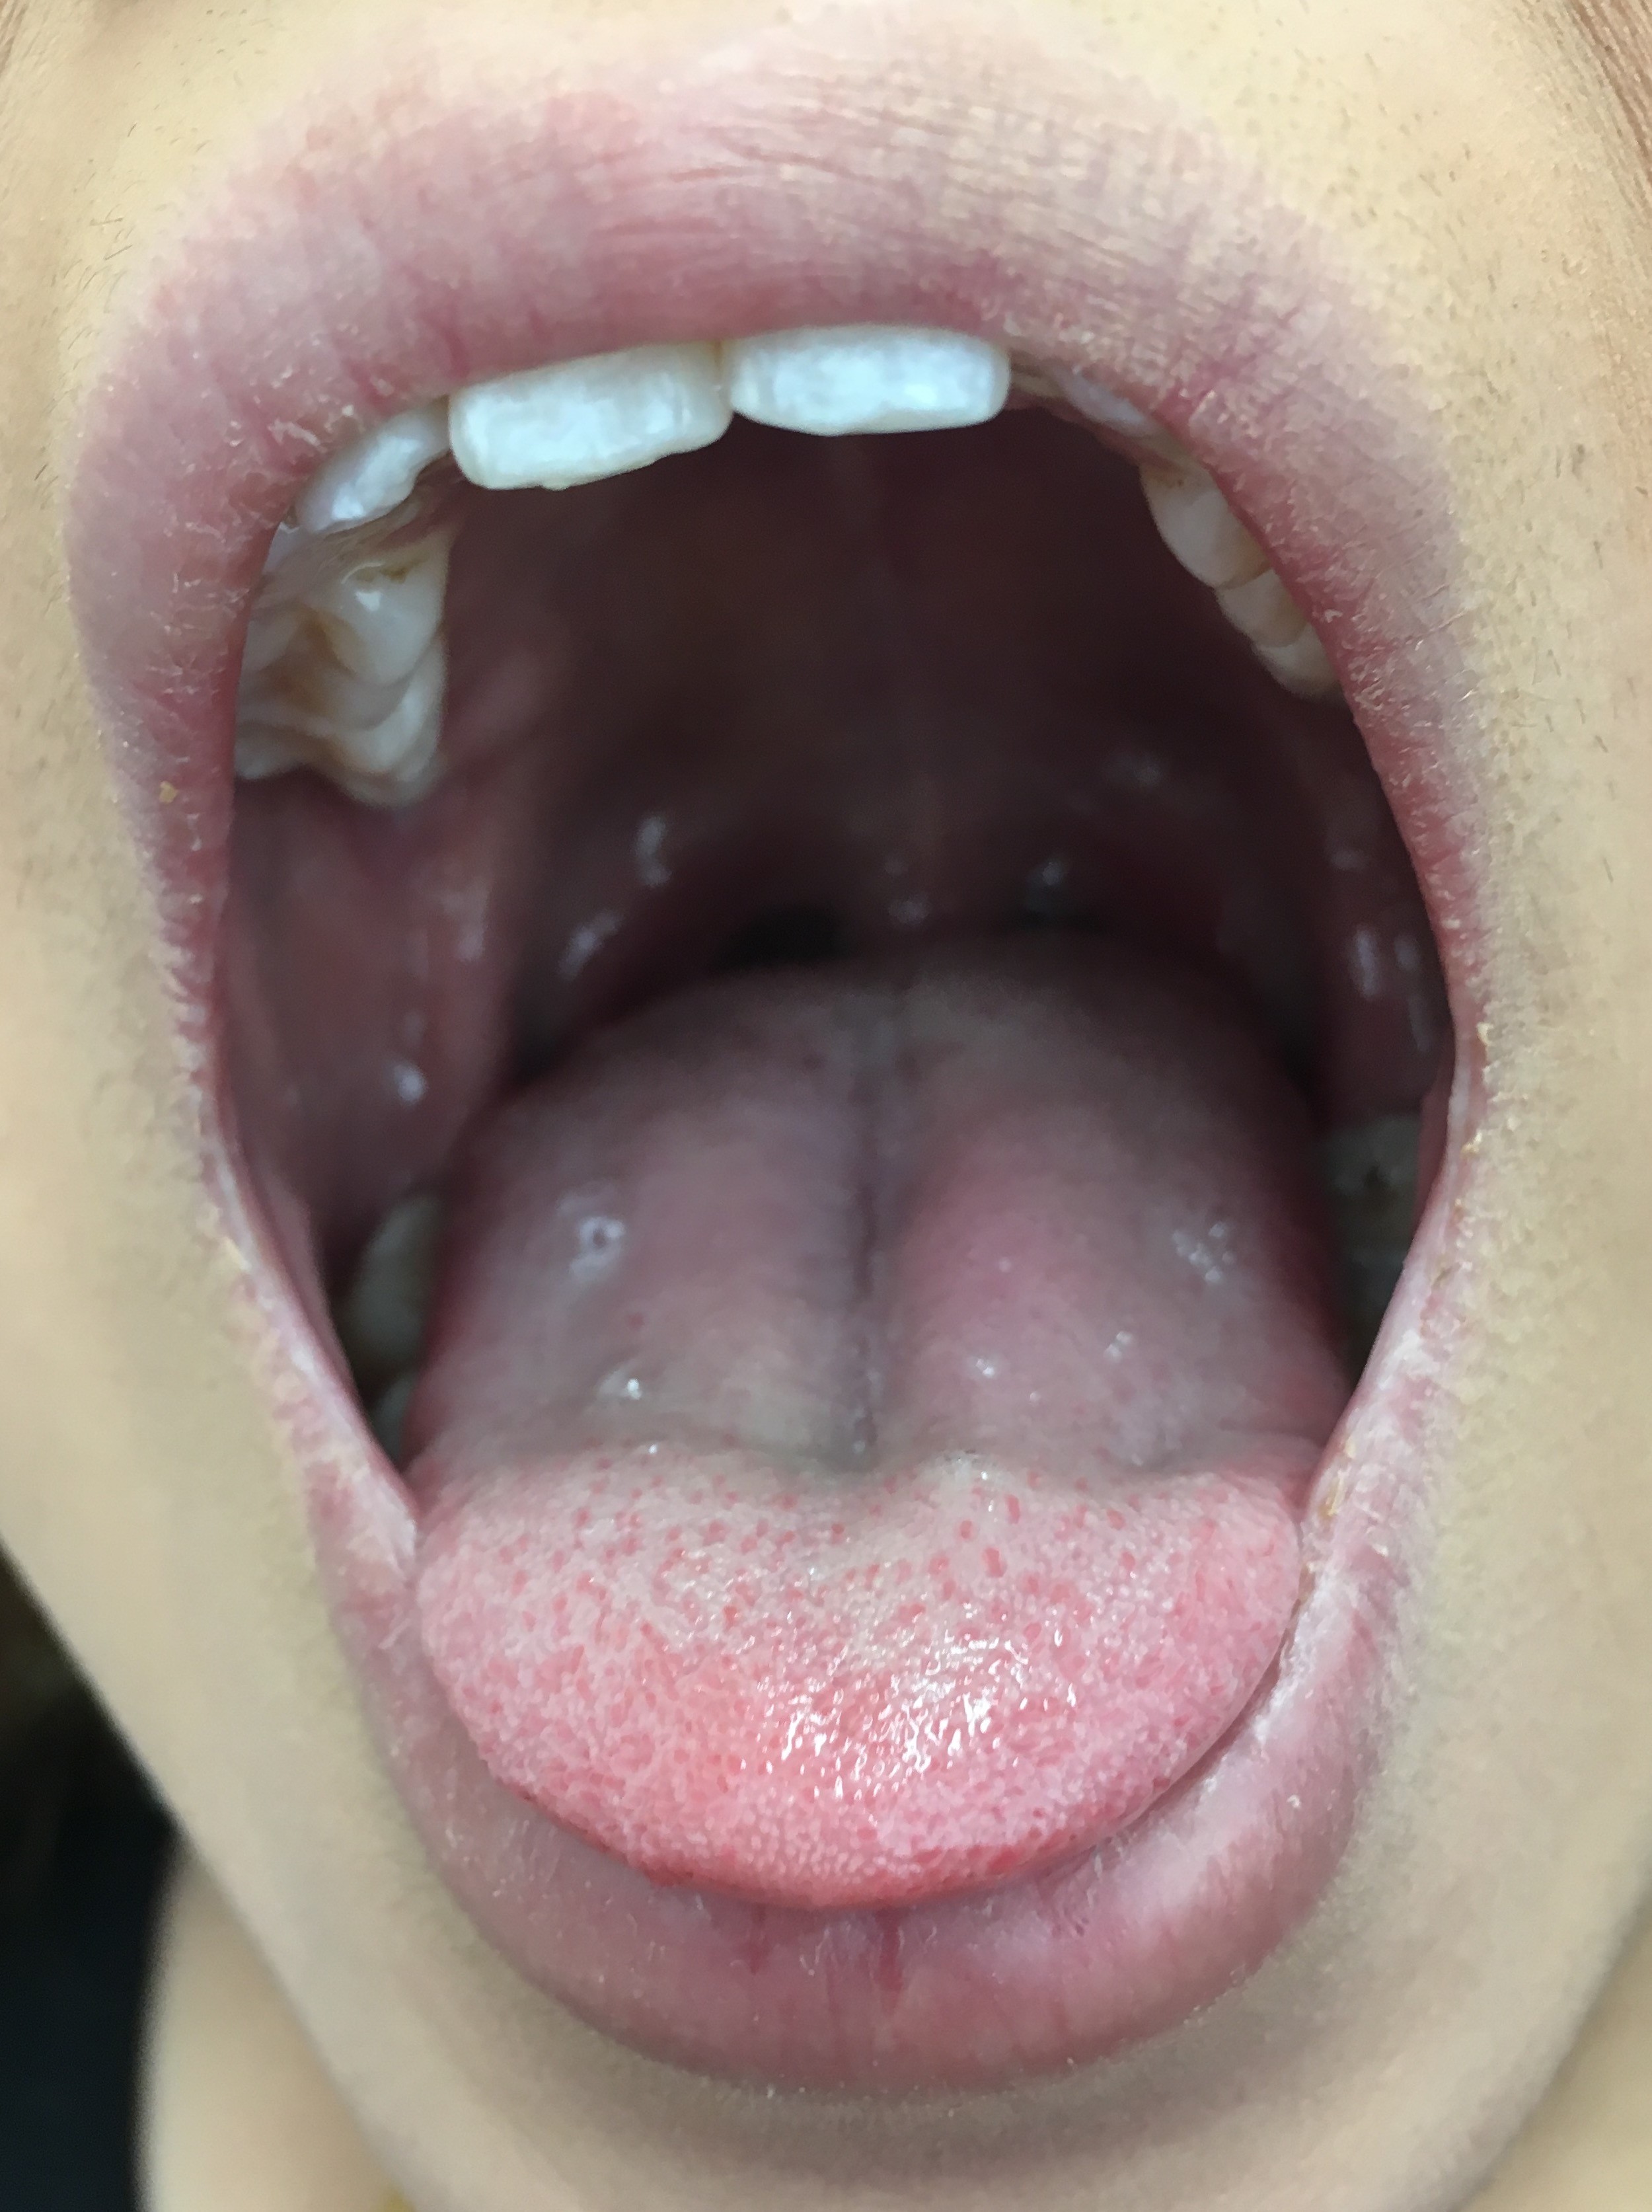 Deep throat contest /amateur pics/